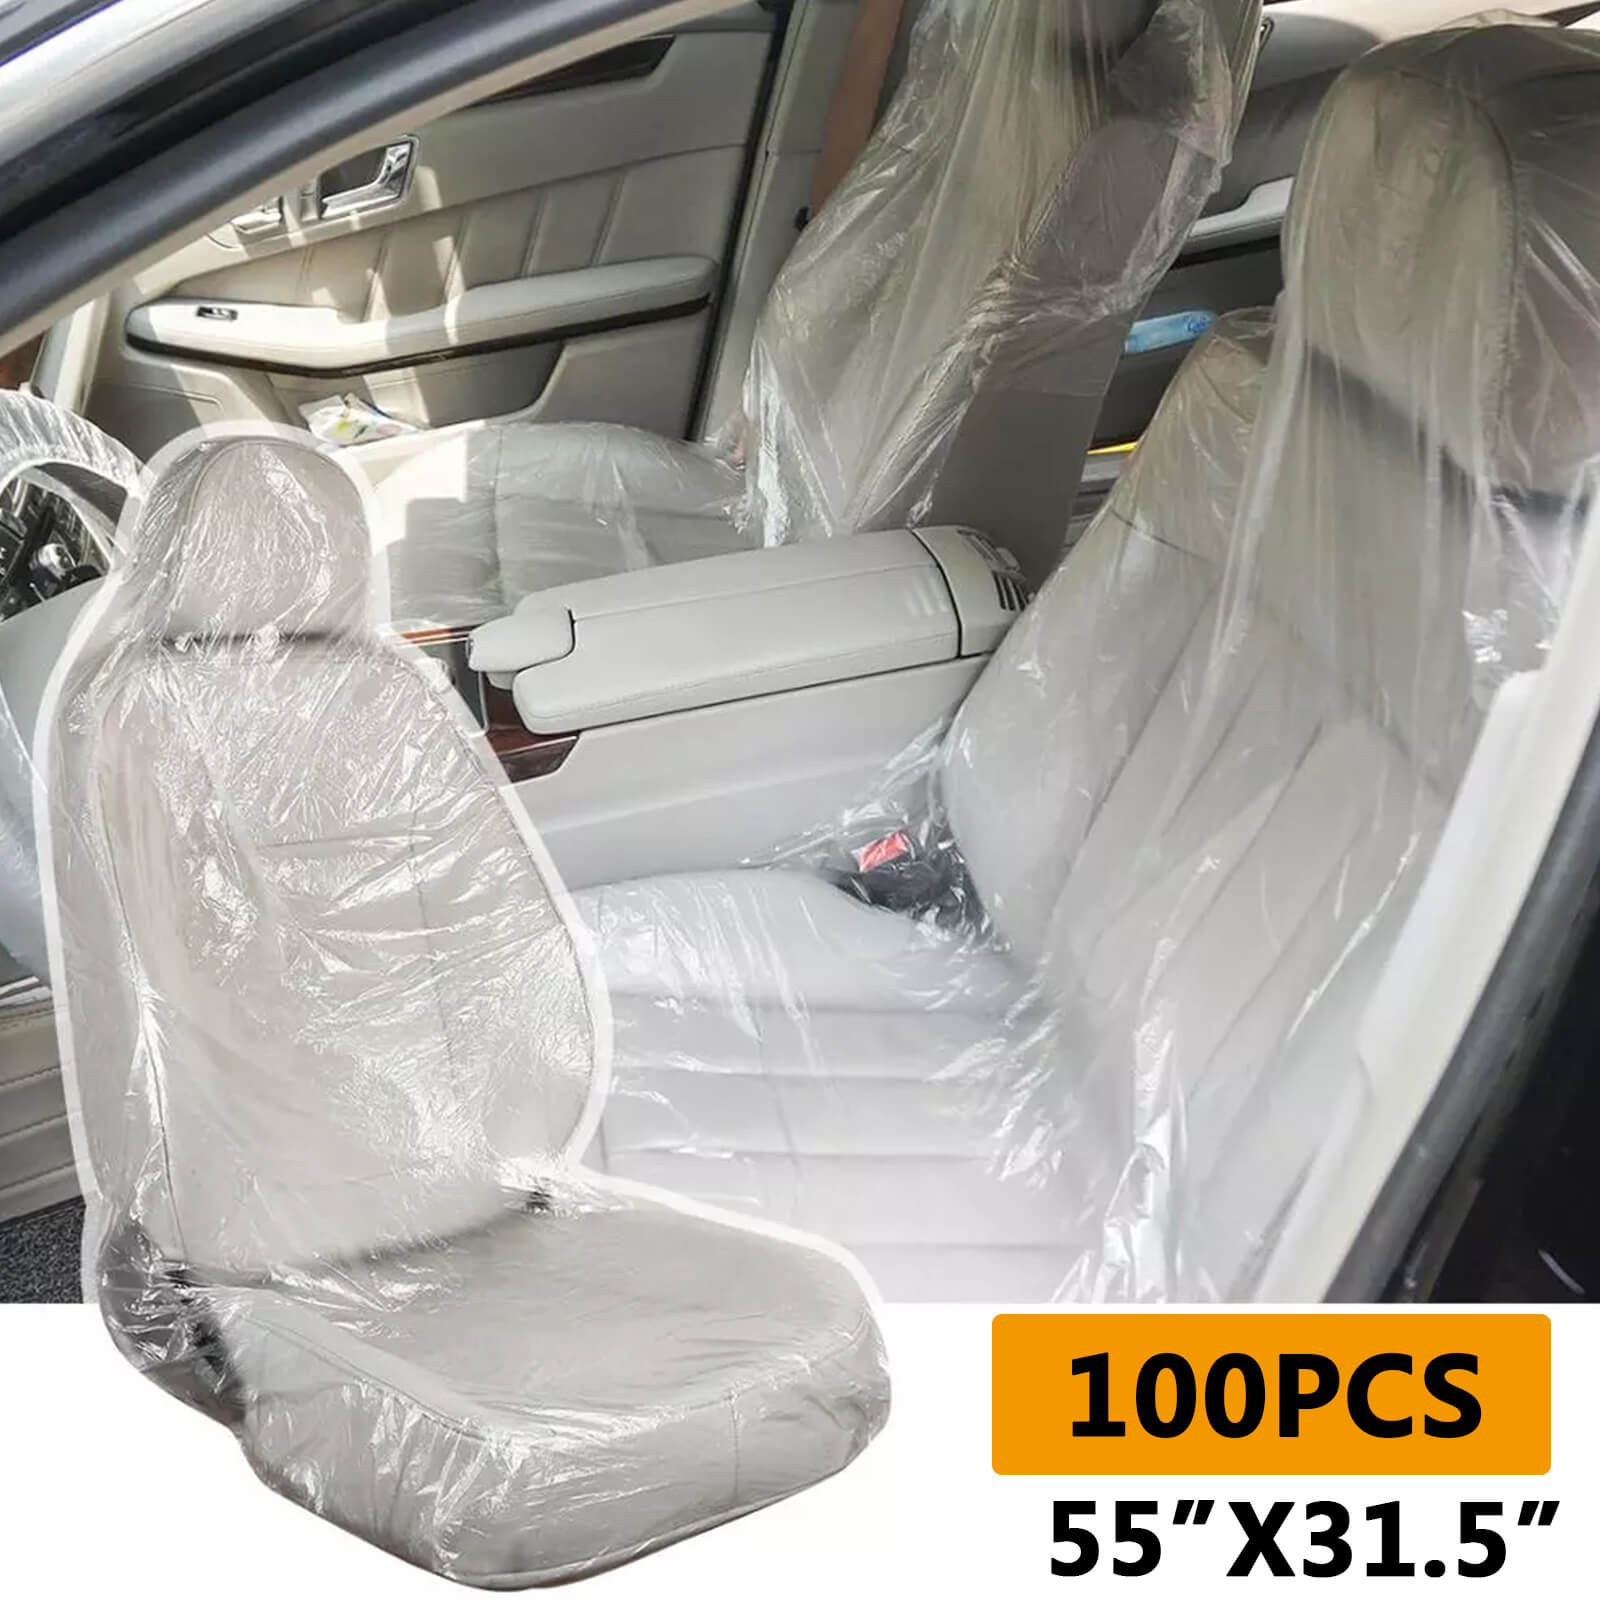 100pcs Disposable Plastic Car Seat Cover